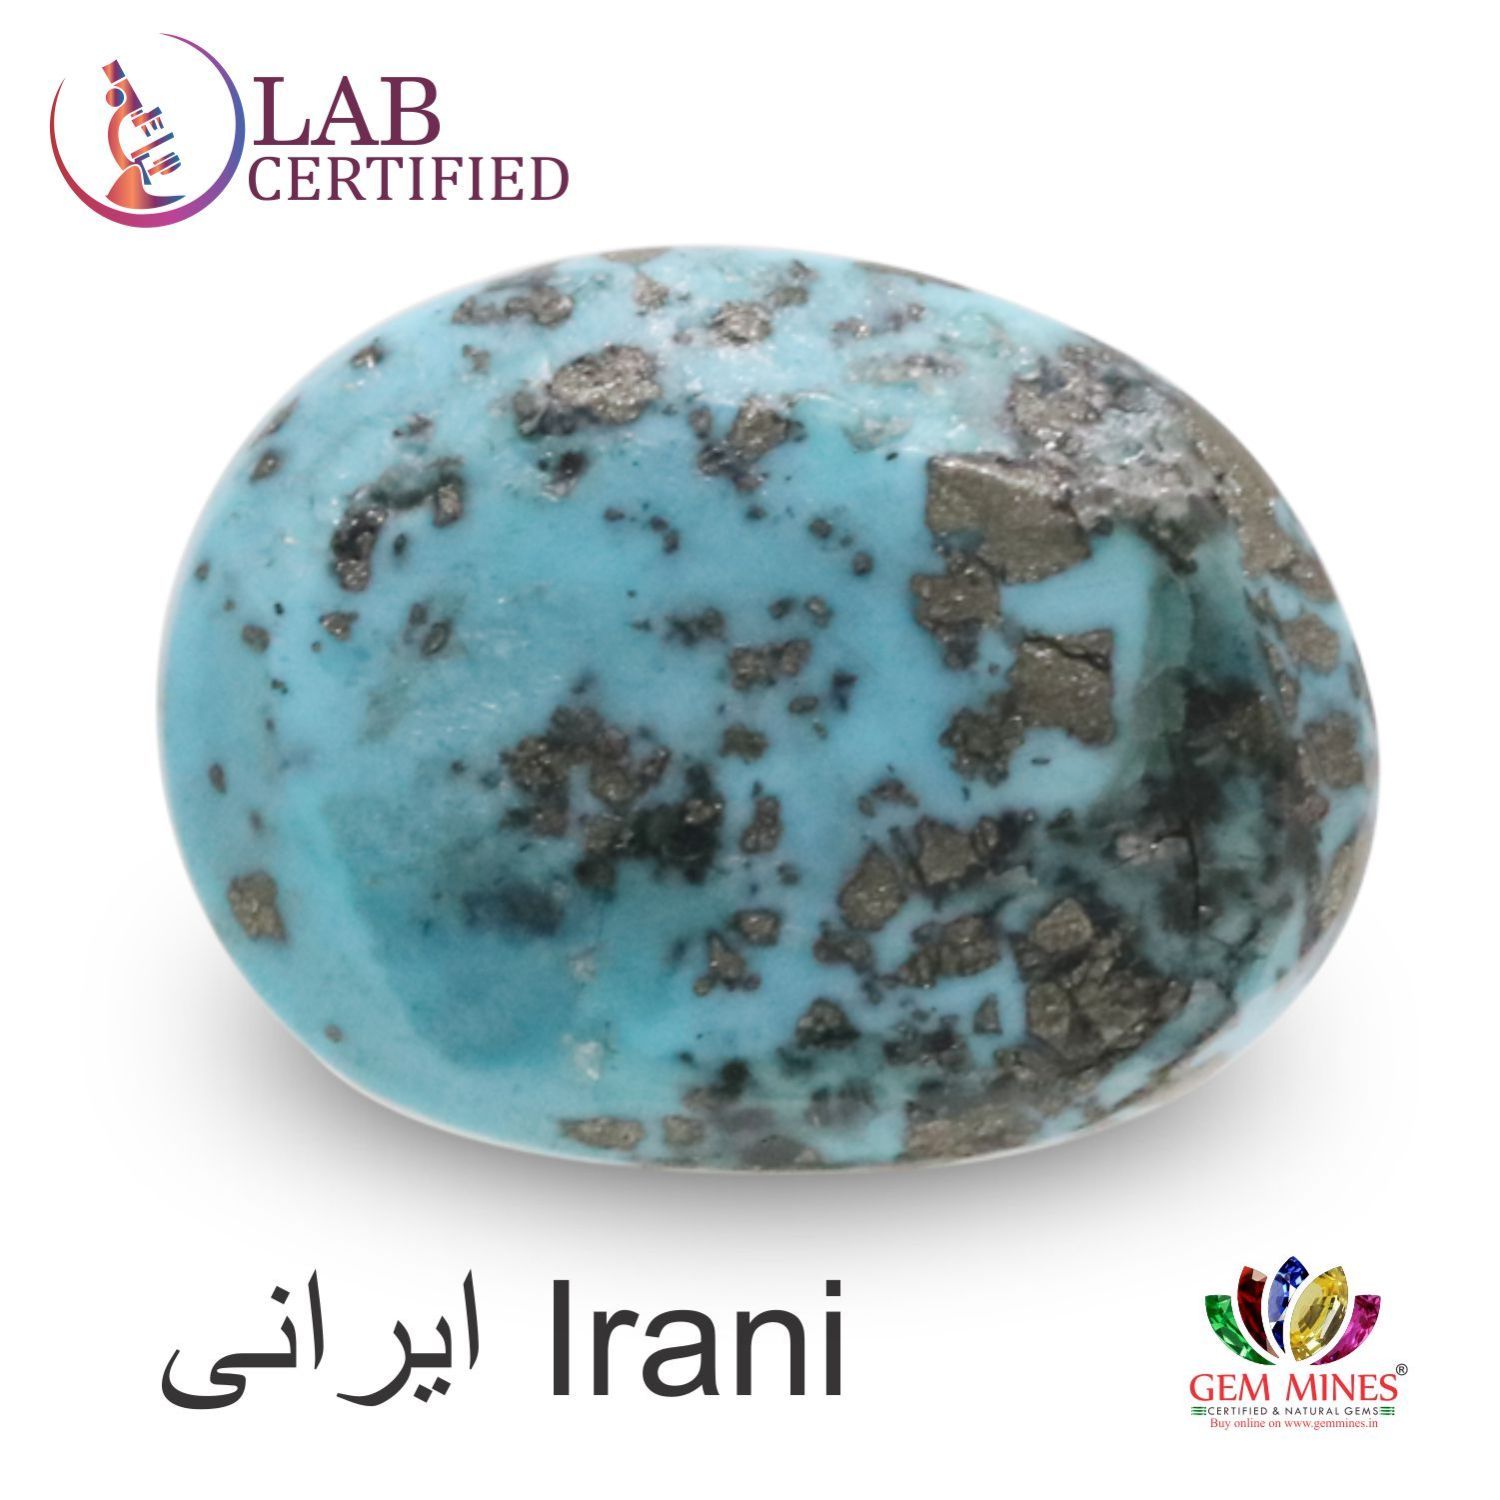 Turquoise (Irani) 13.66 Ct.